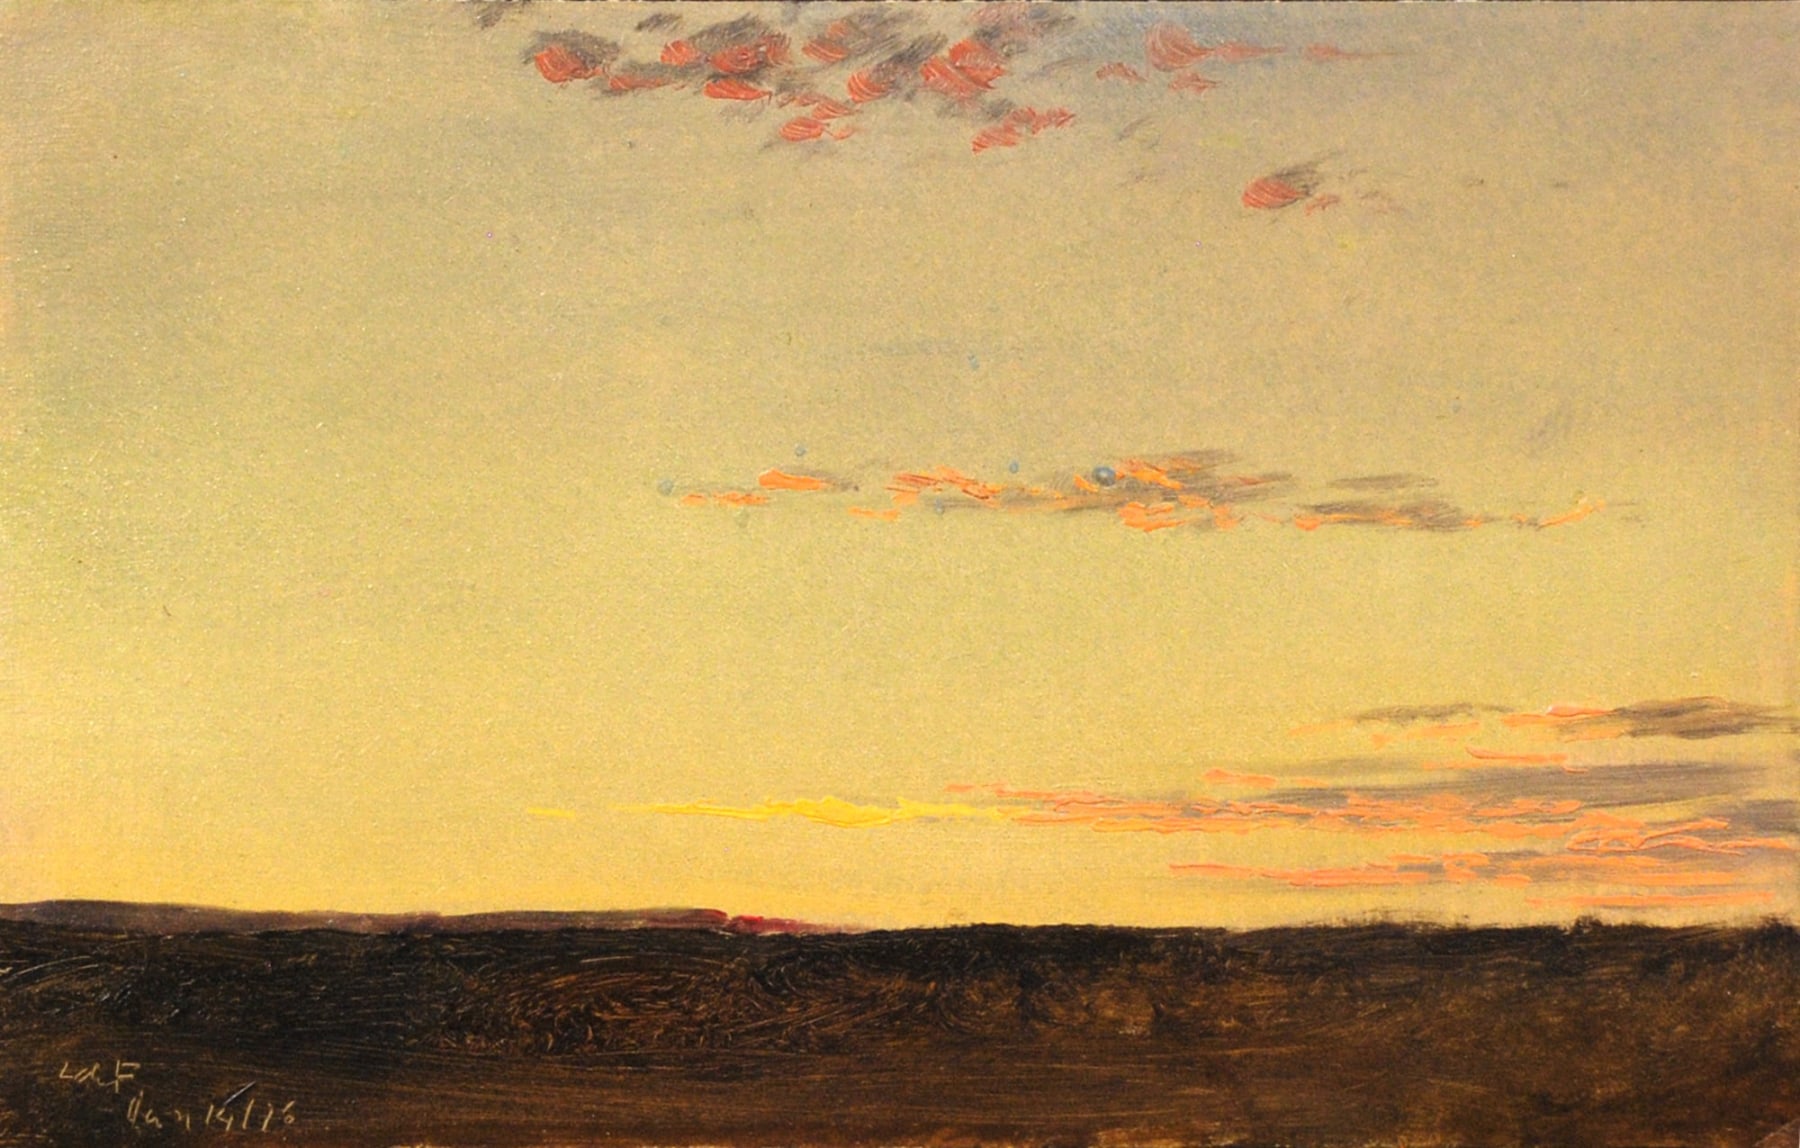 LOCKWOOD DE FOREST (1850-1932), Winter Sunset along the Nile, January 14, 1876